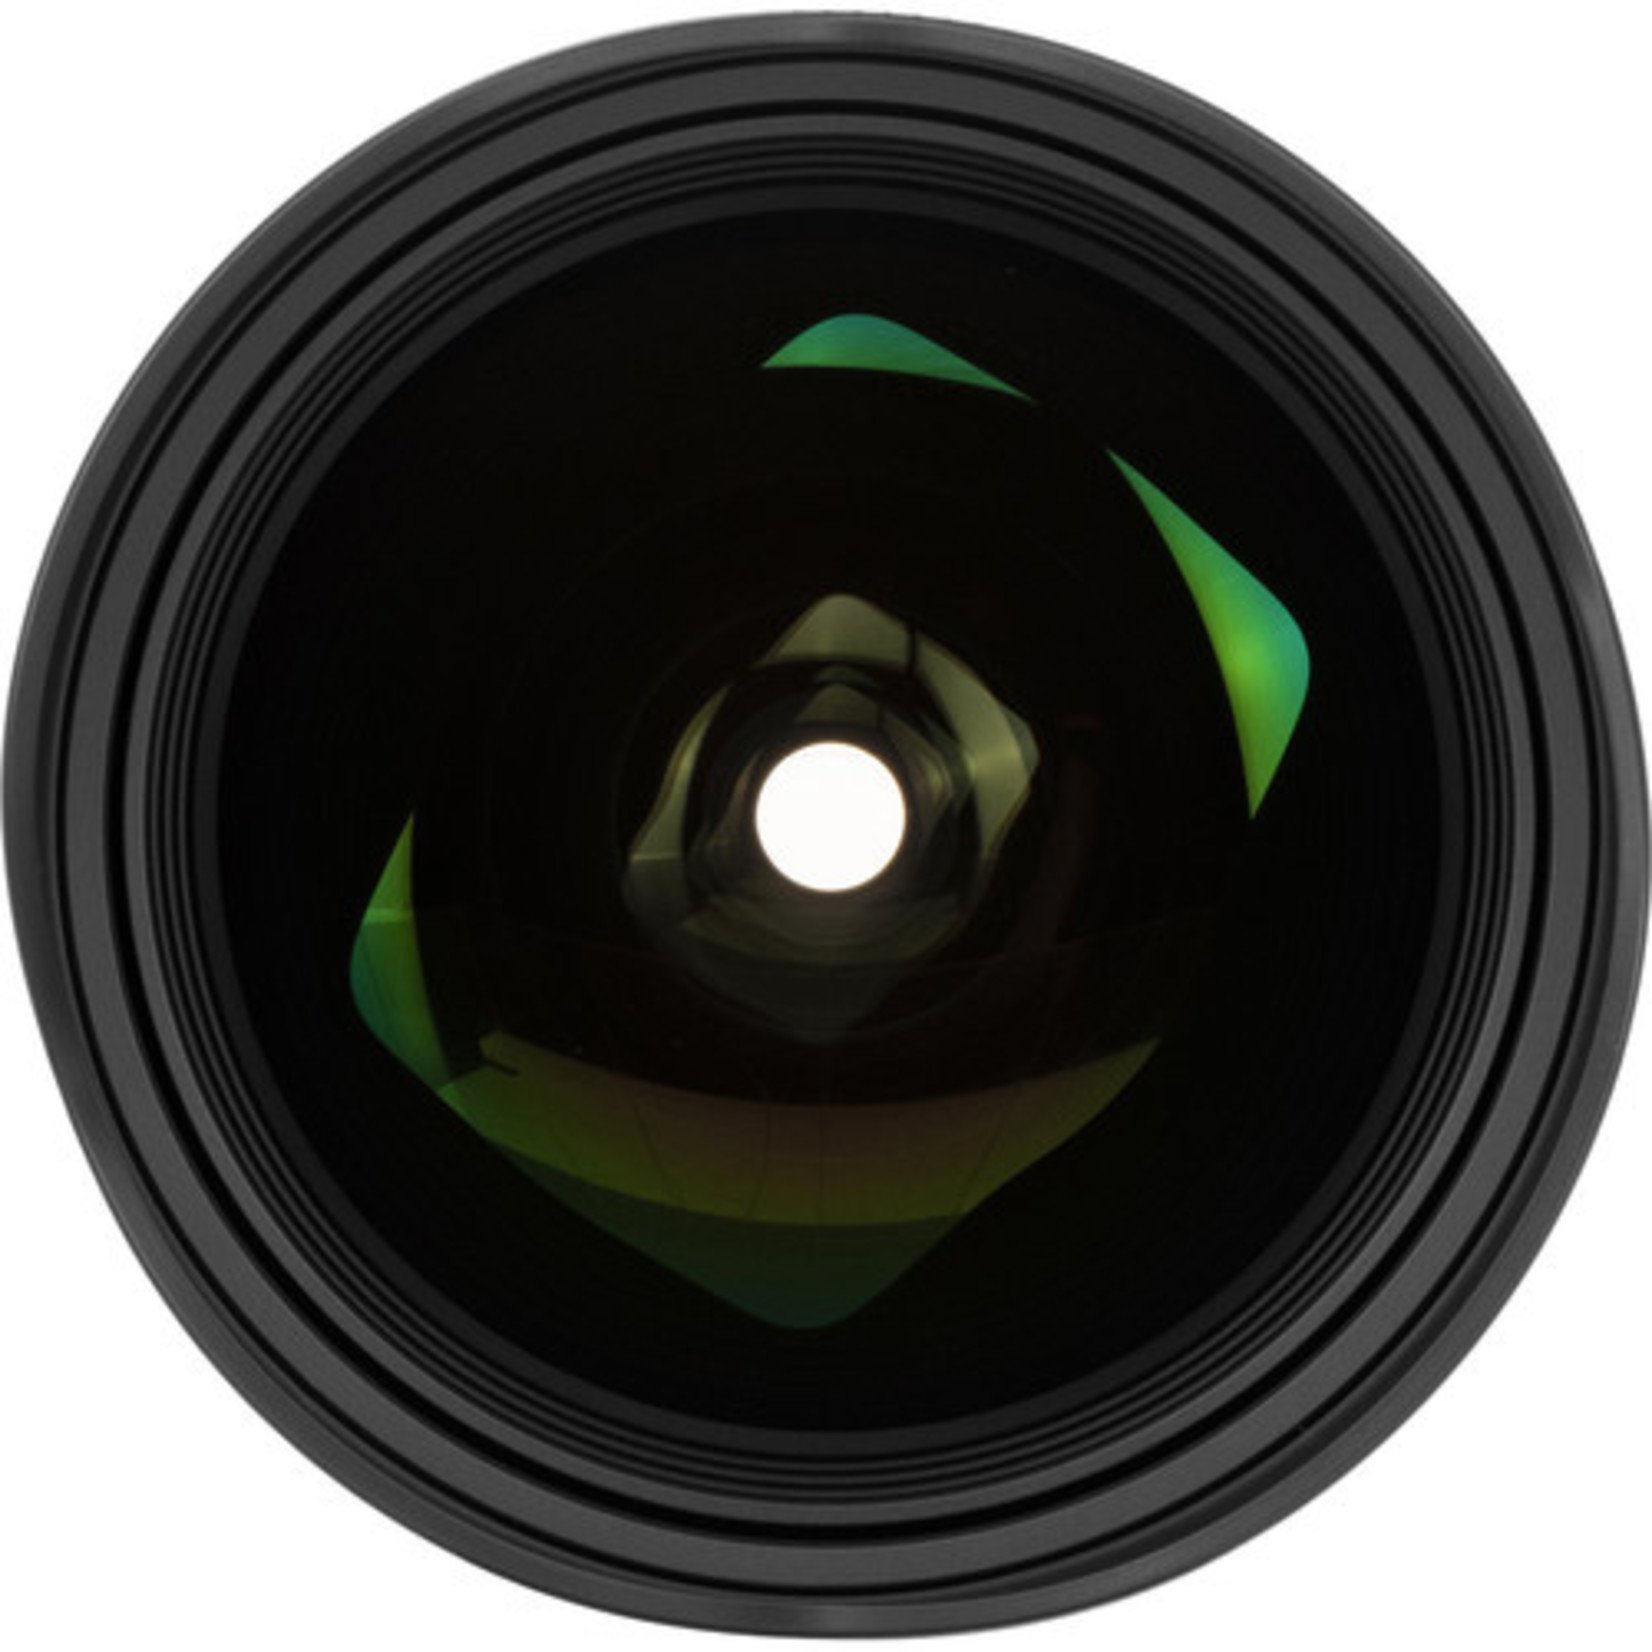 Sigma Sigma 14-24mm f/2.8 DG DN Art Lens for Sony E